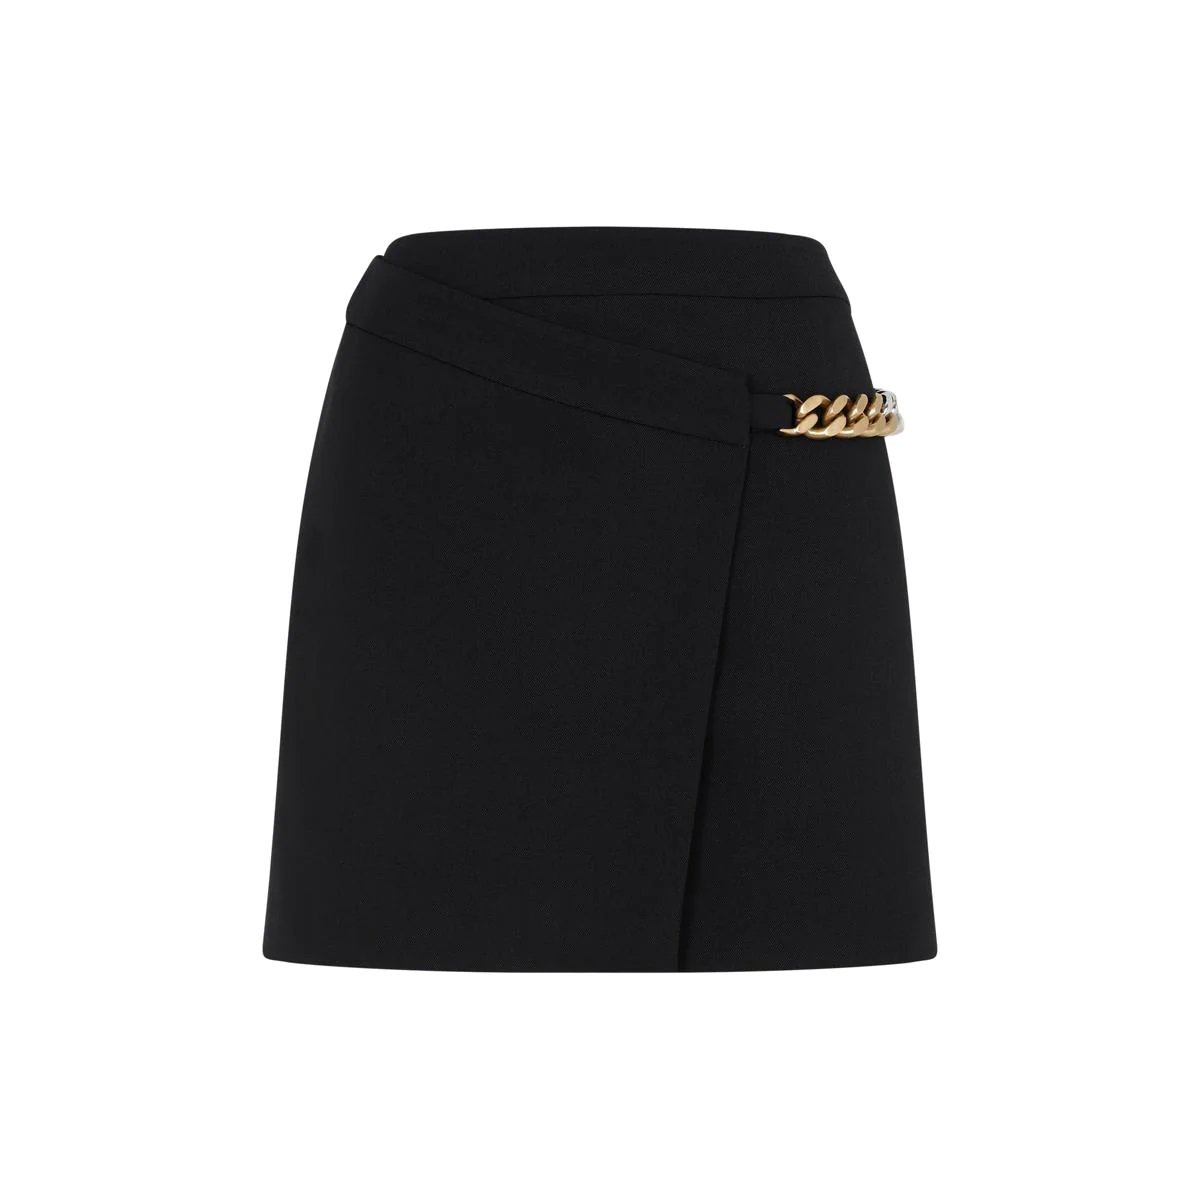 Stella McCartney Falabella Skirt in Black.jpg